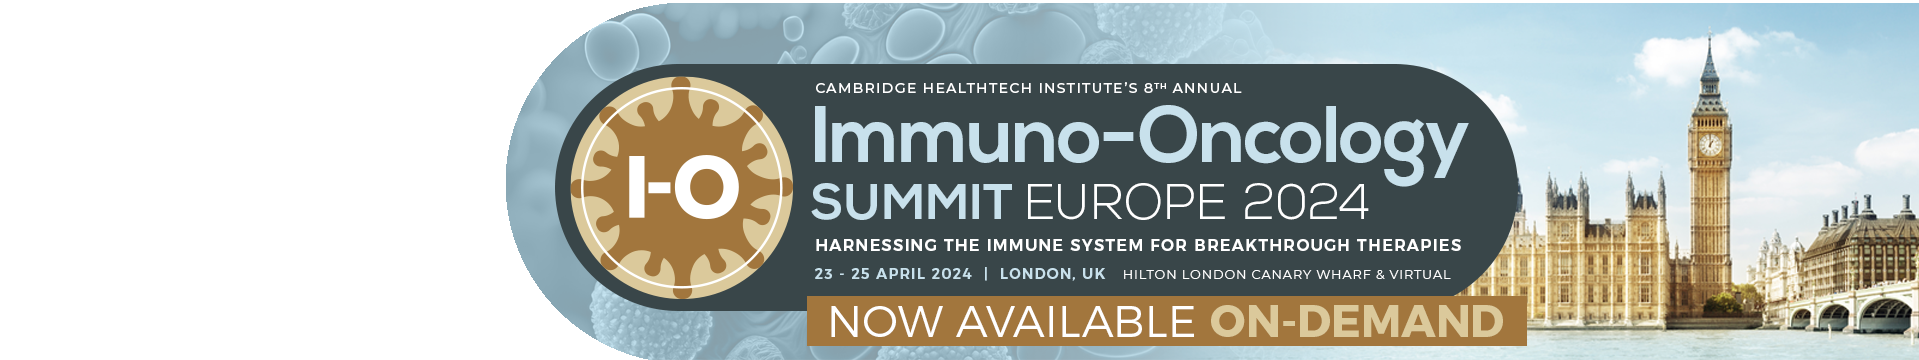 Immuno-Oncology Summit Europe 2023